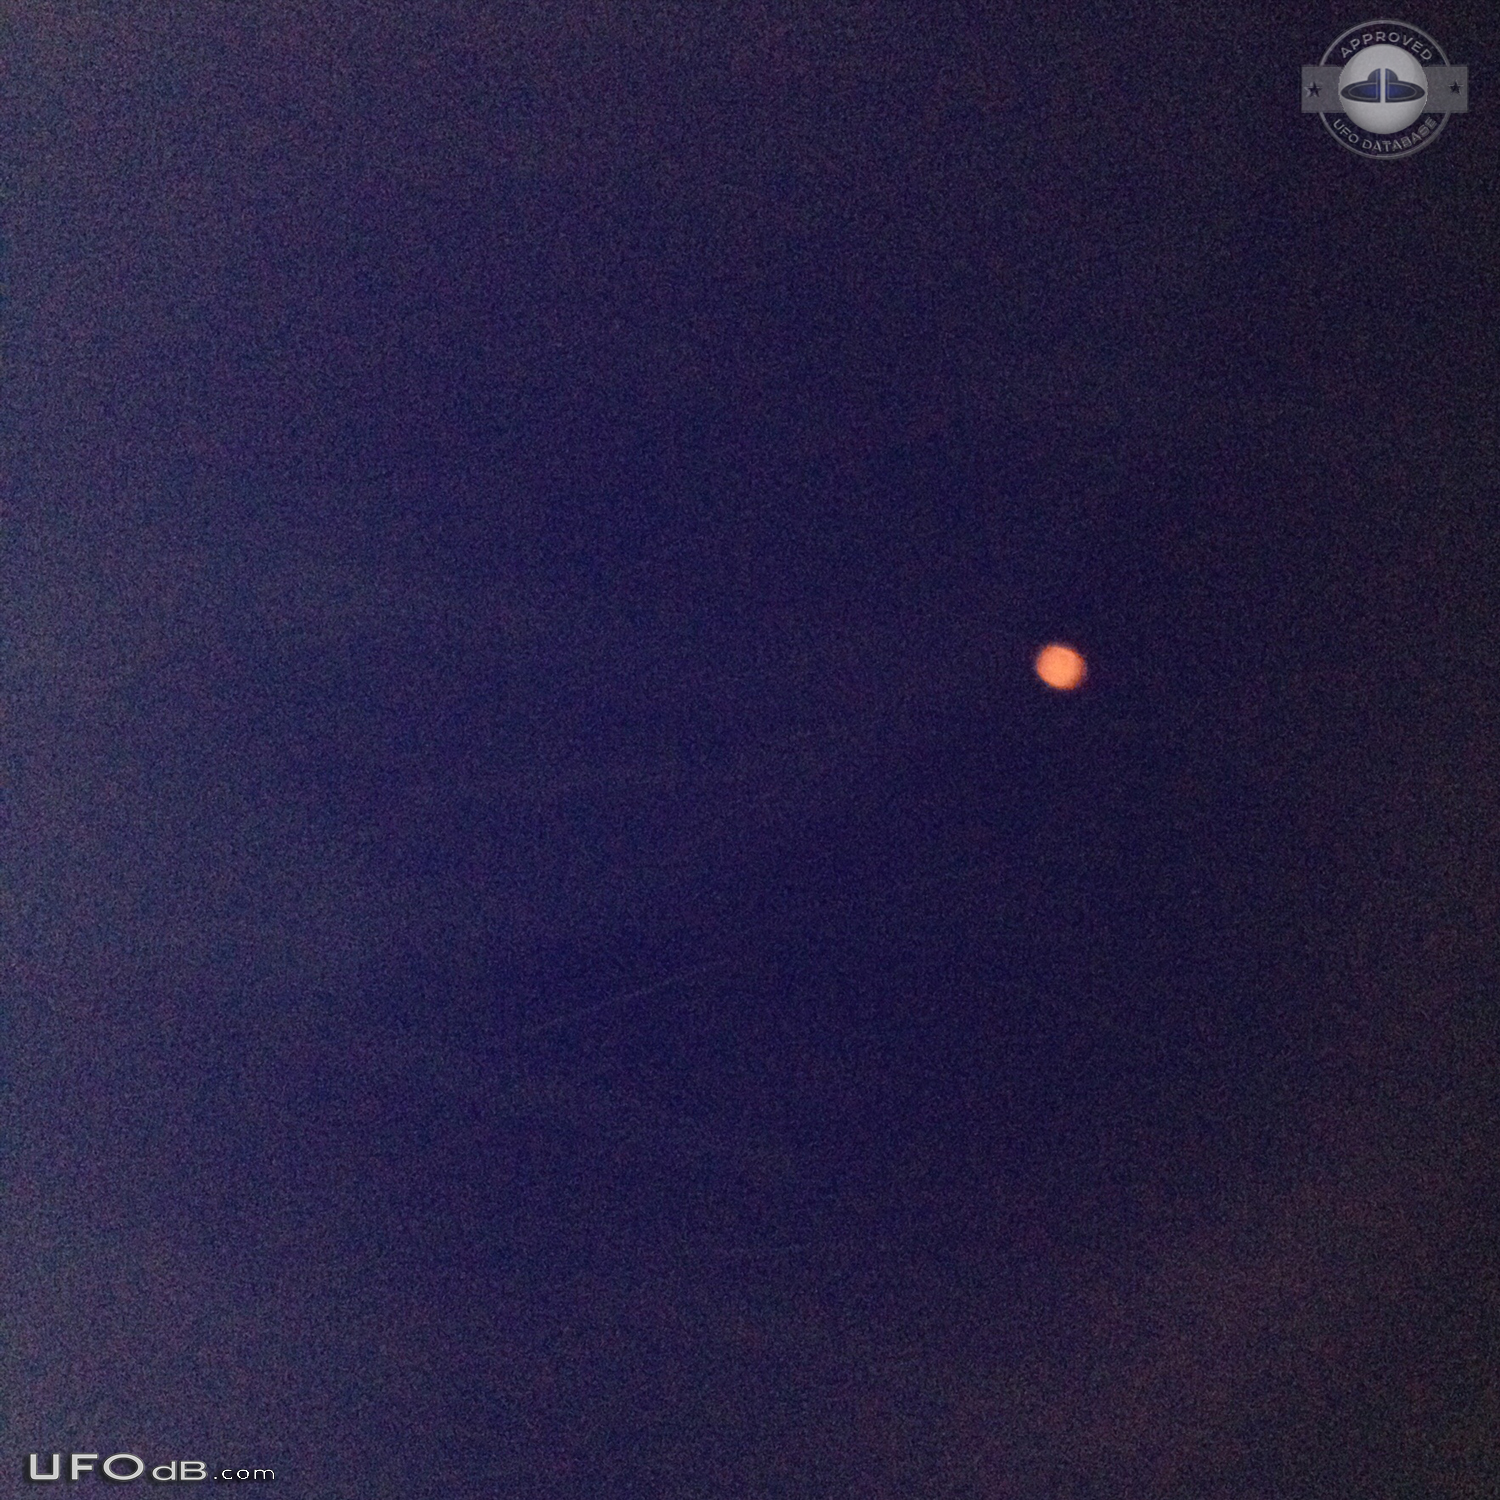 Orange orb UFO transparent edge ring - Huntington Beach California USA UFO Picture #783-1